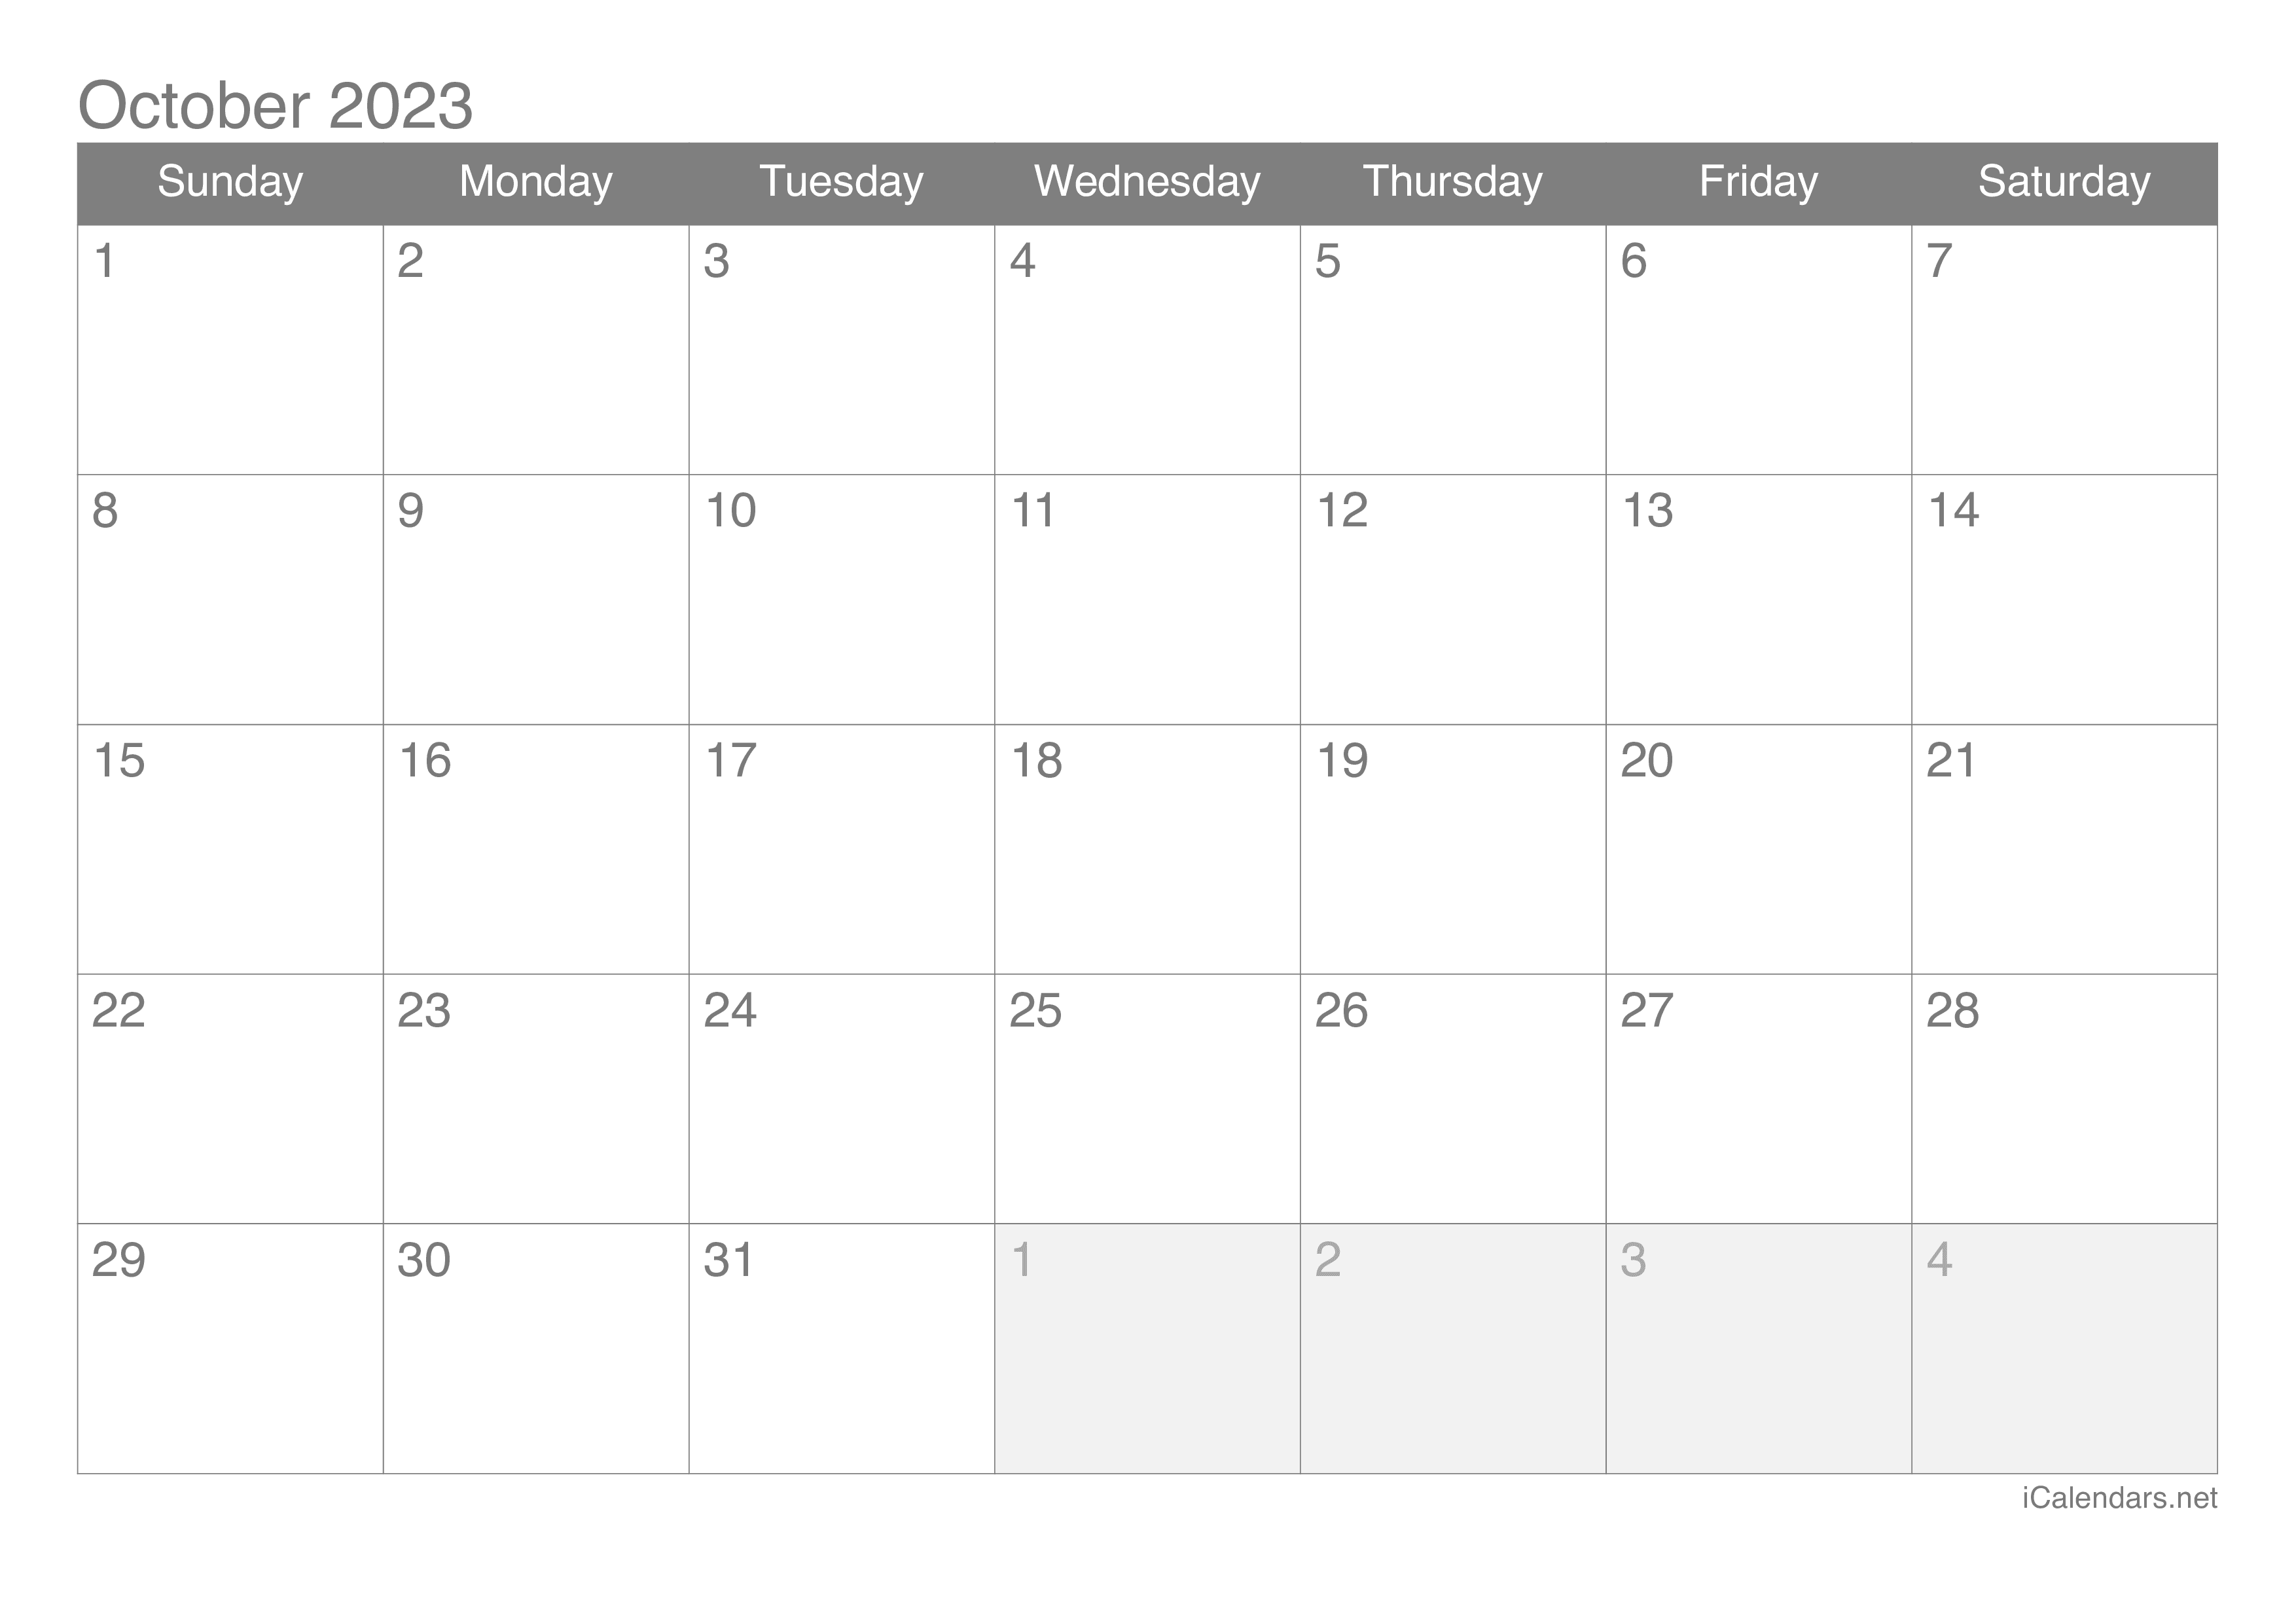 october-2023-printable-calendar-icalendars